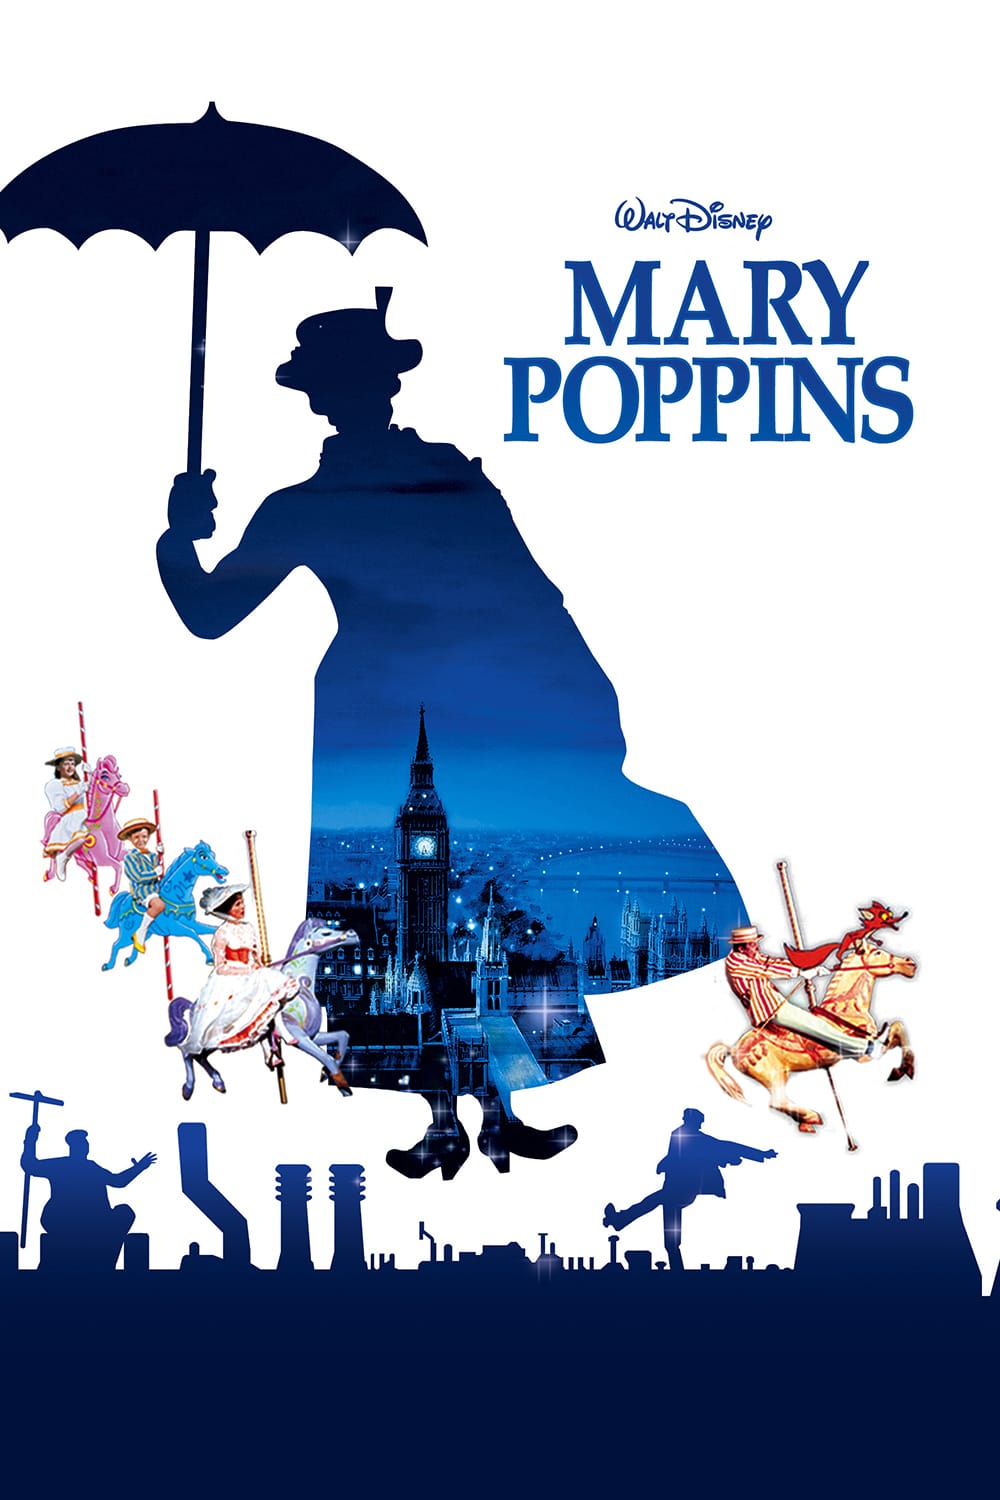 Affiche du film "Mary Poppins"